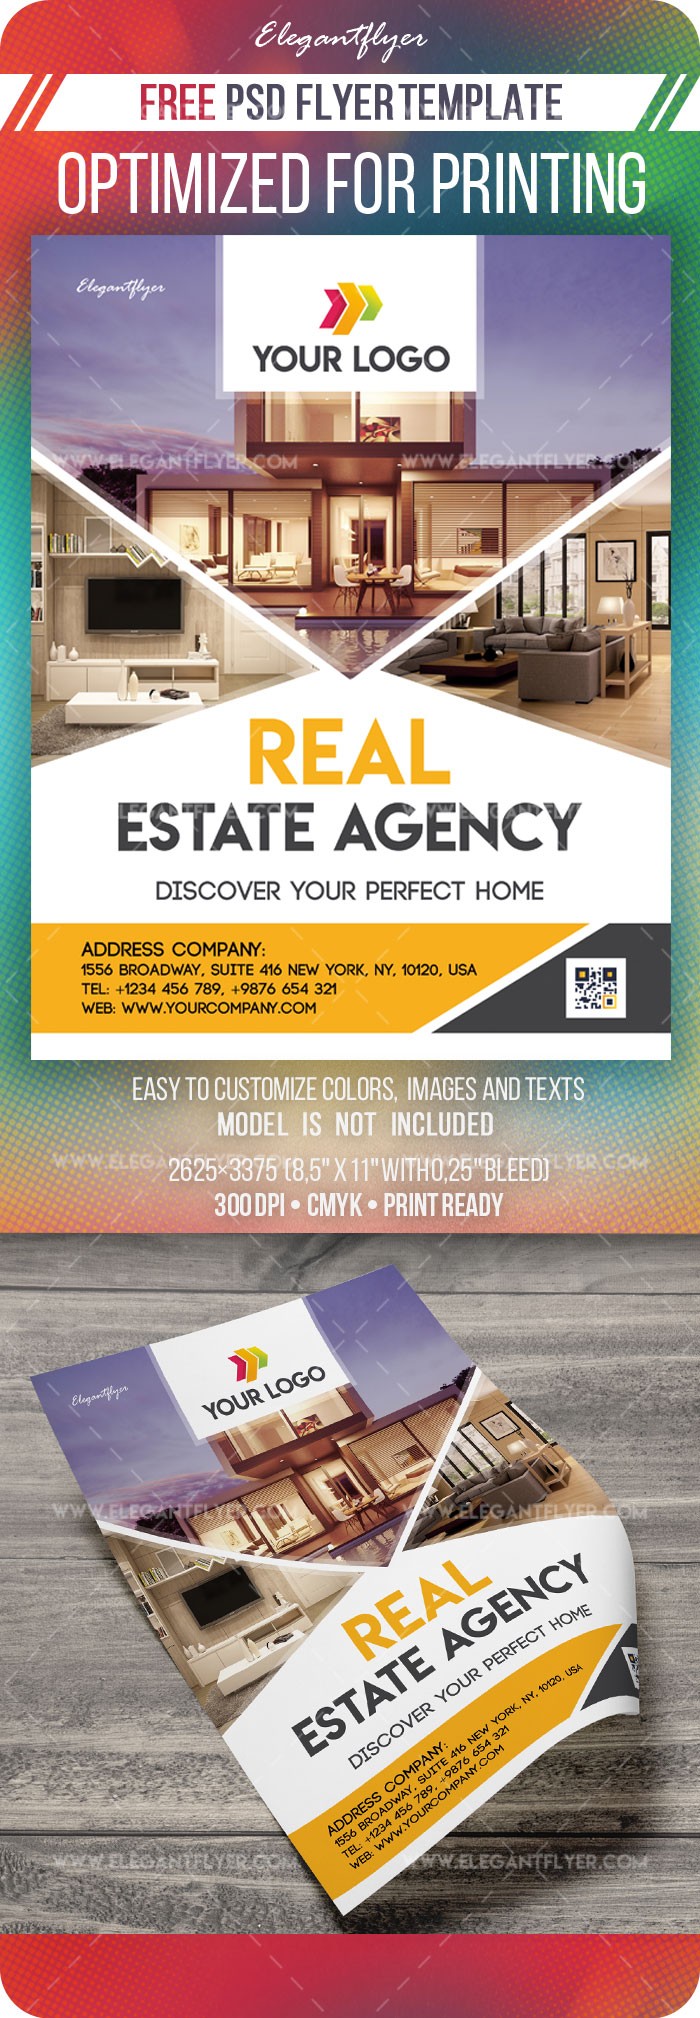 Real Estate Agency by ElegantFlyer